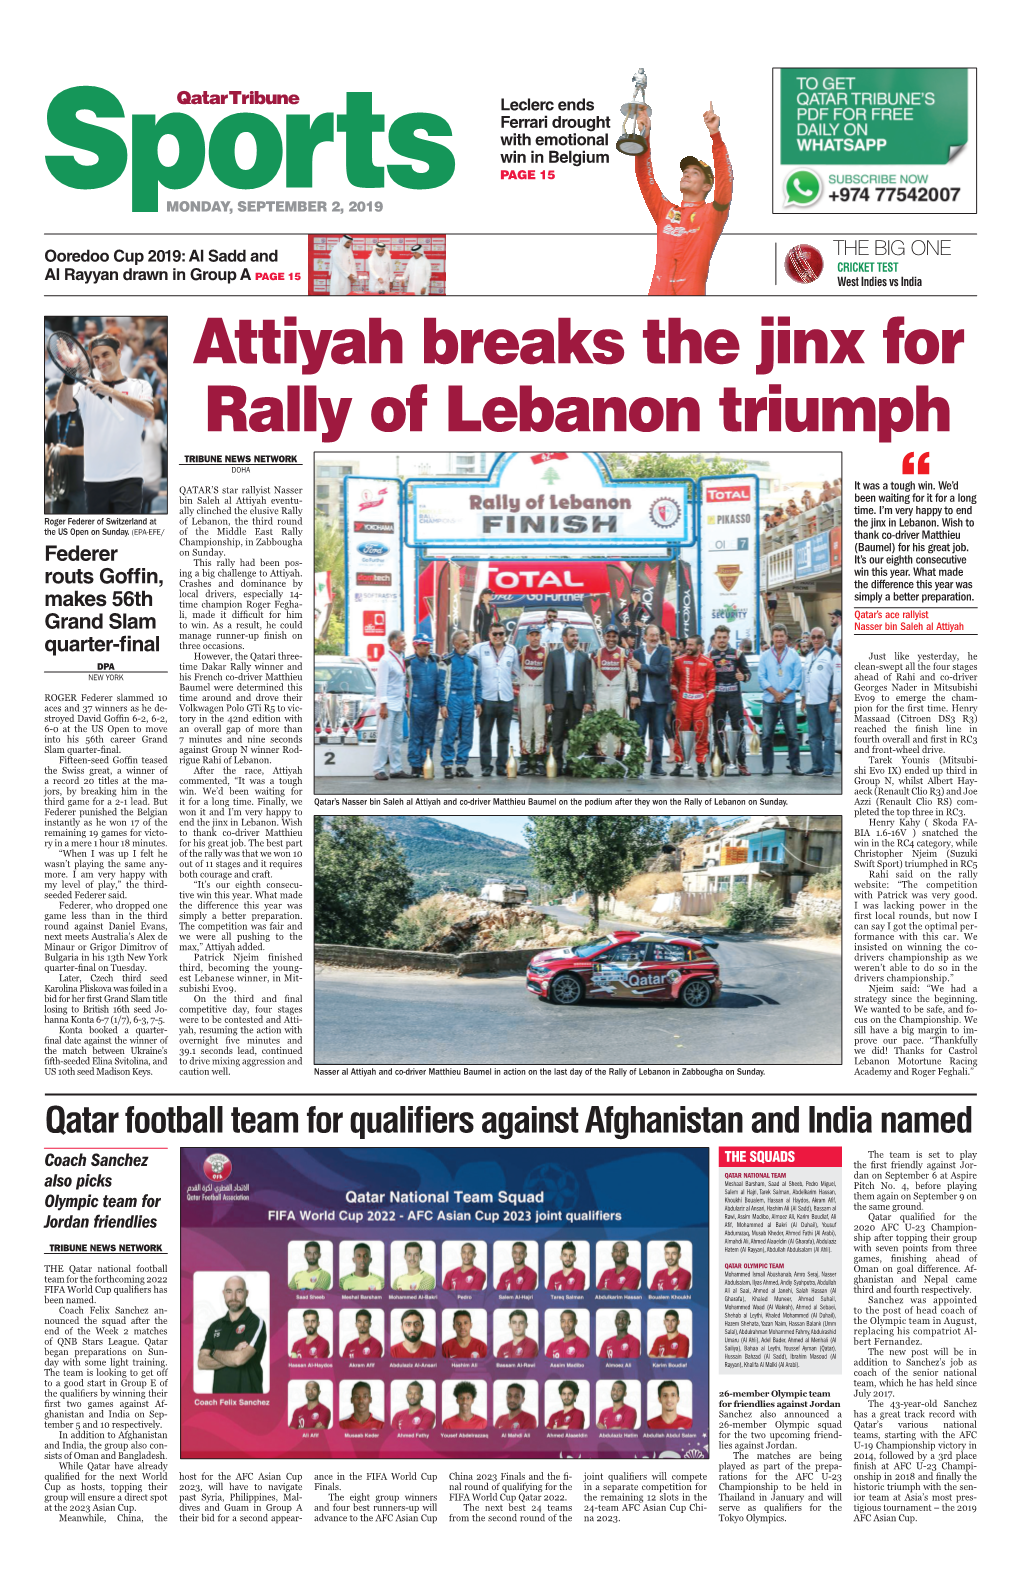 Attiyah Breaks the Jinx for Rally of Lebanon Triumph Tribune News Network DOHA